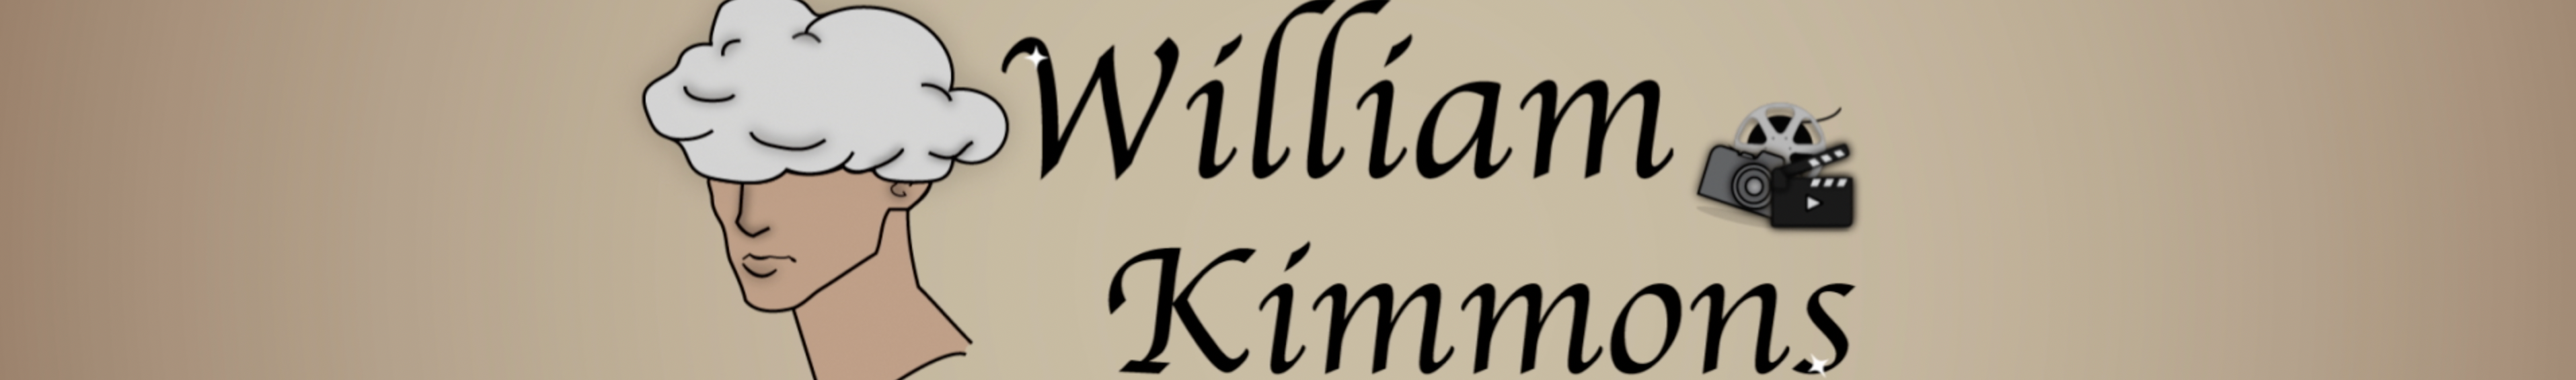 William Kimmons's profile banner